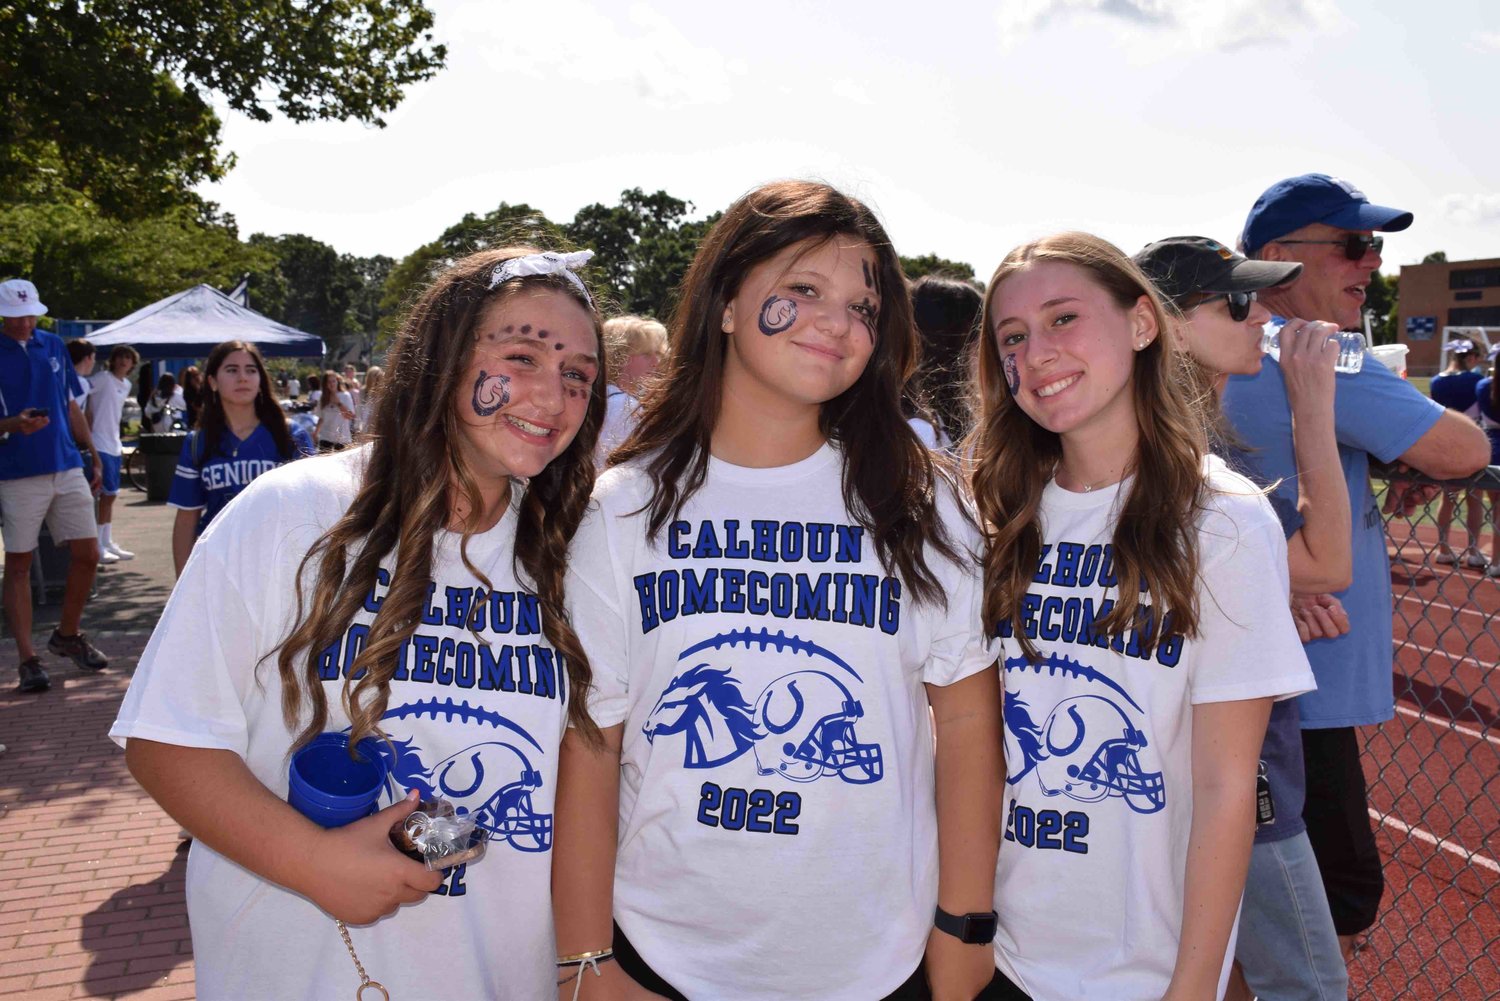 Samantha Shaiken, Holly Dachs and Avery Dujardin showed off their Colts spirit wear.